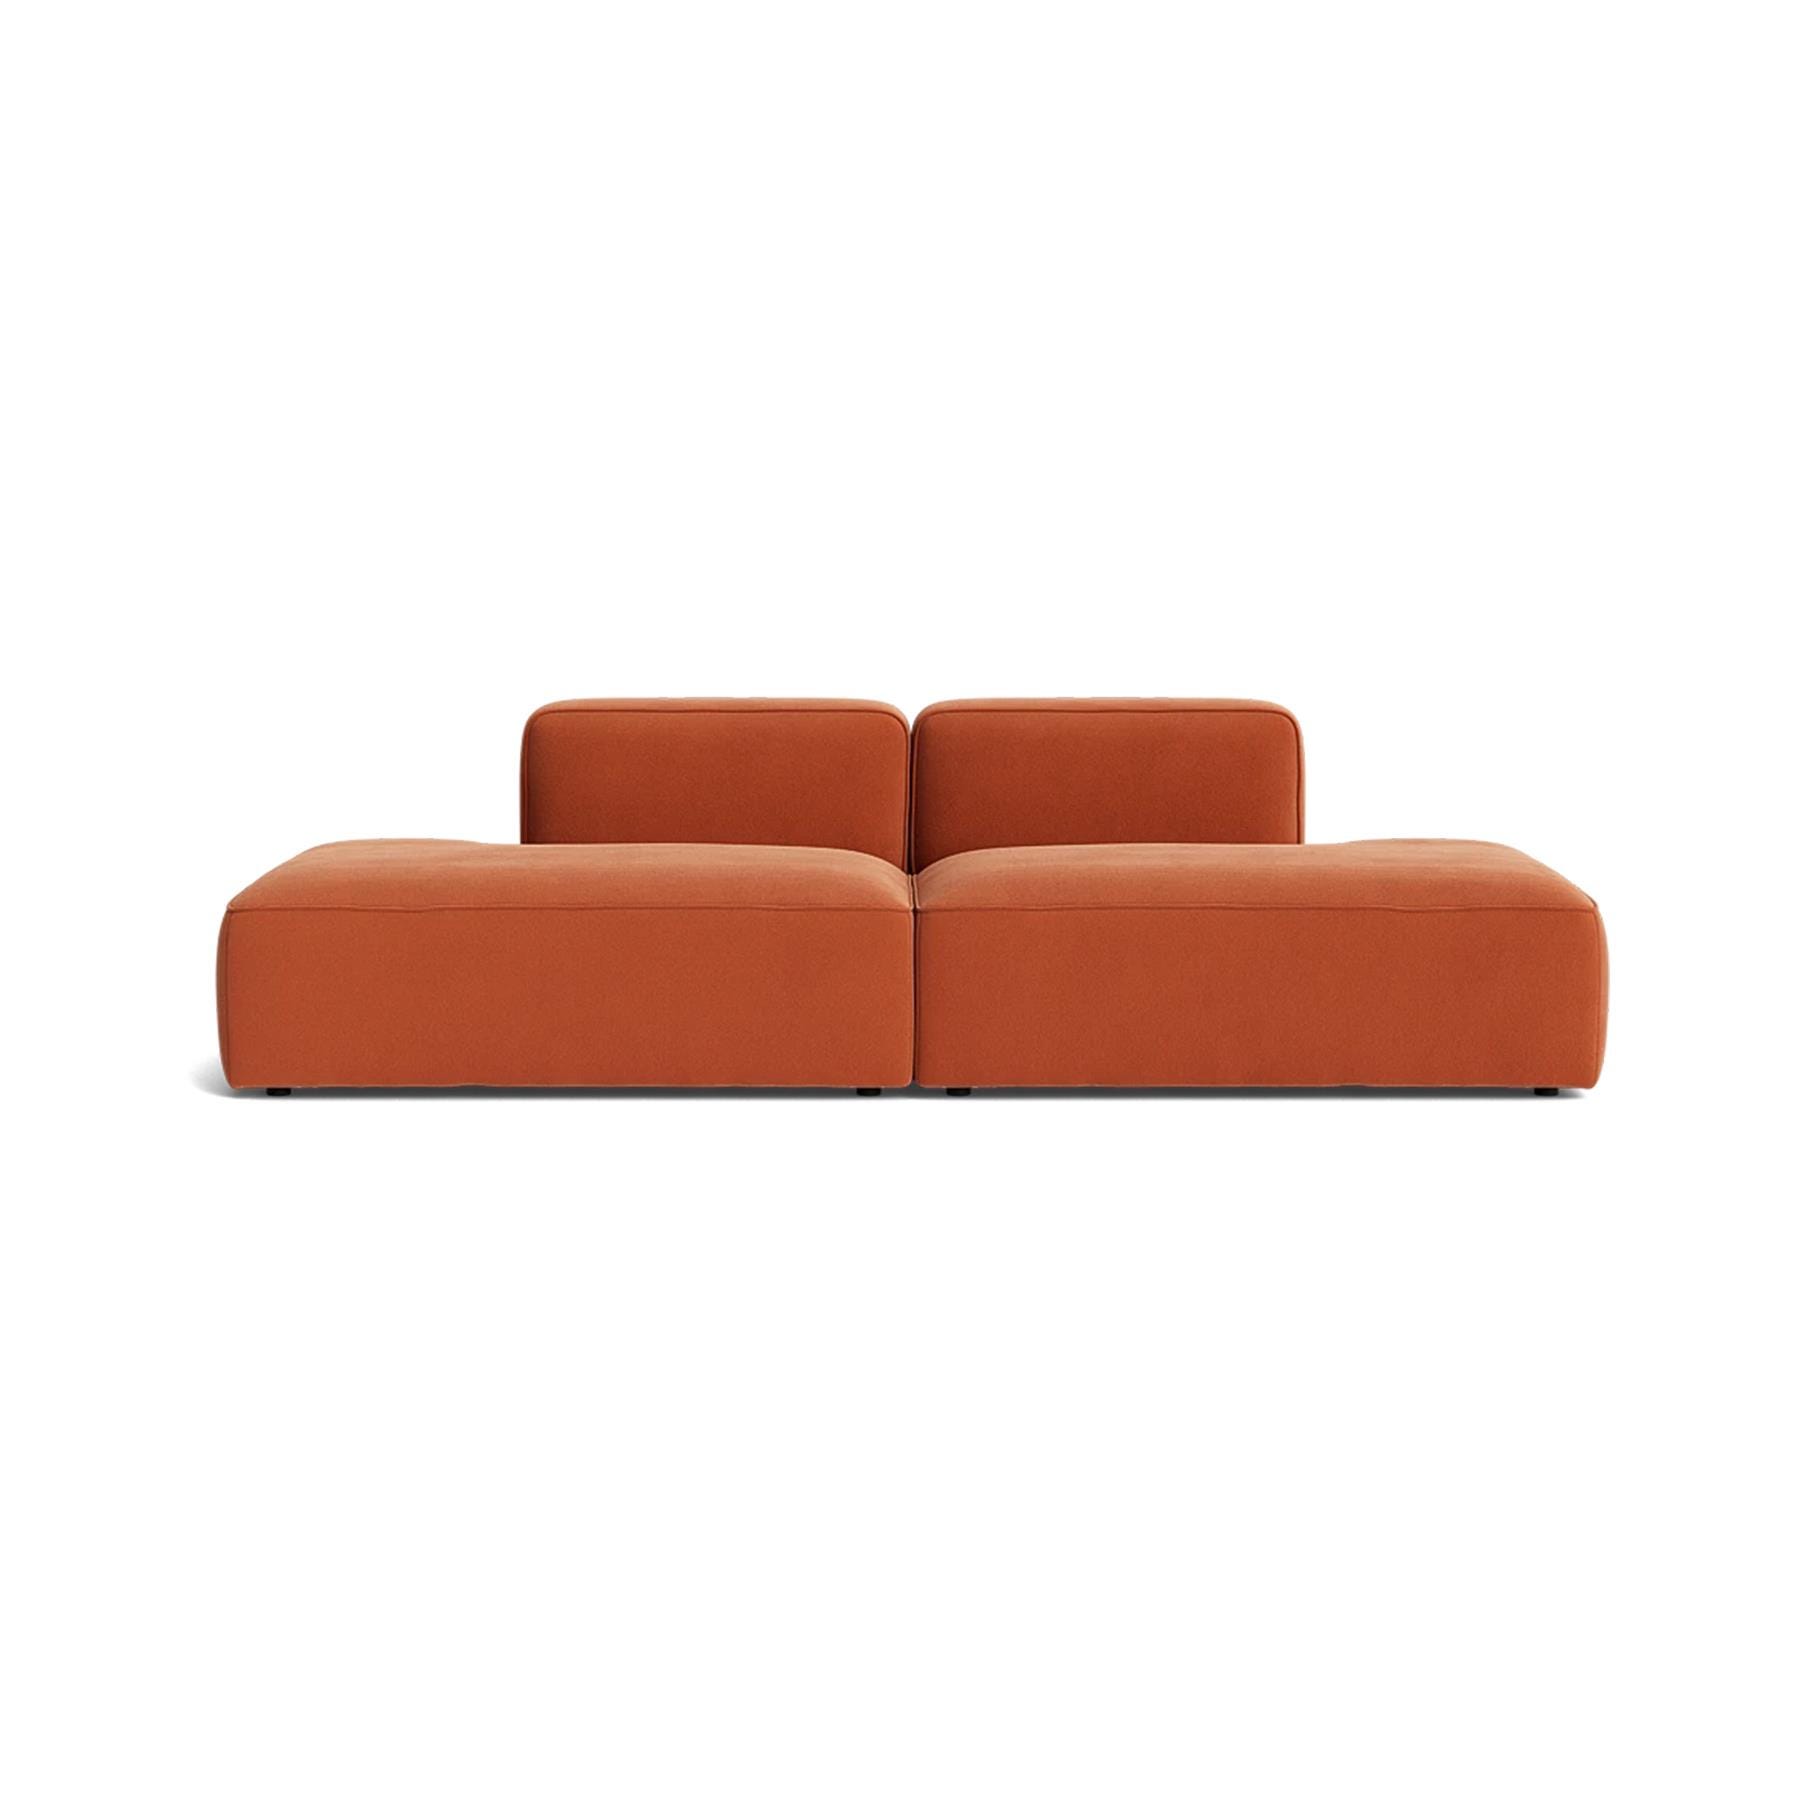 Make Nordic Basecamp Sofa With 2 Open Ends Nordic Velvet 100 Orange Designer Furniture From Holloways Of Ludlow